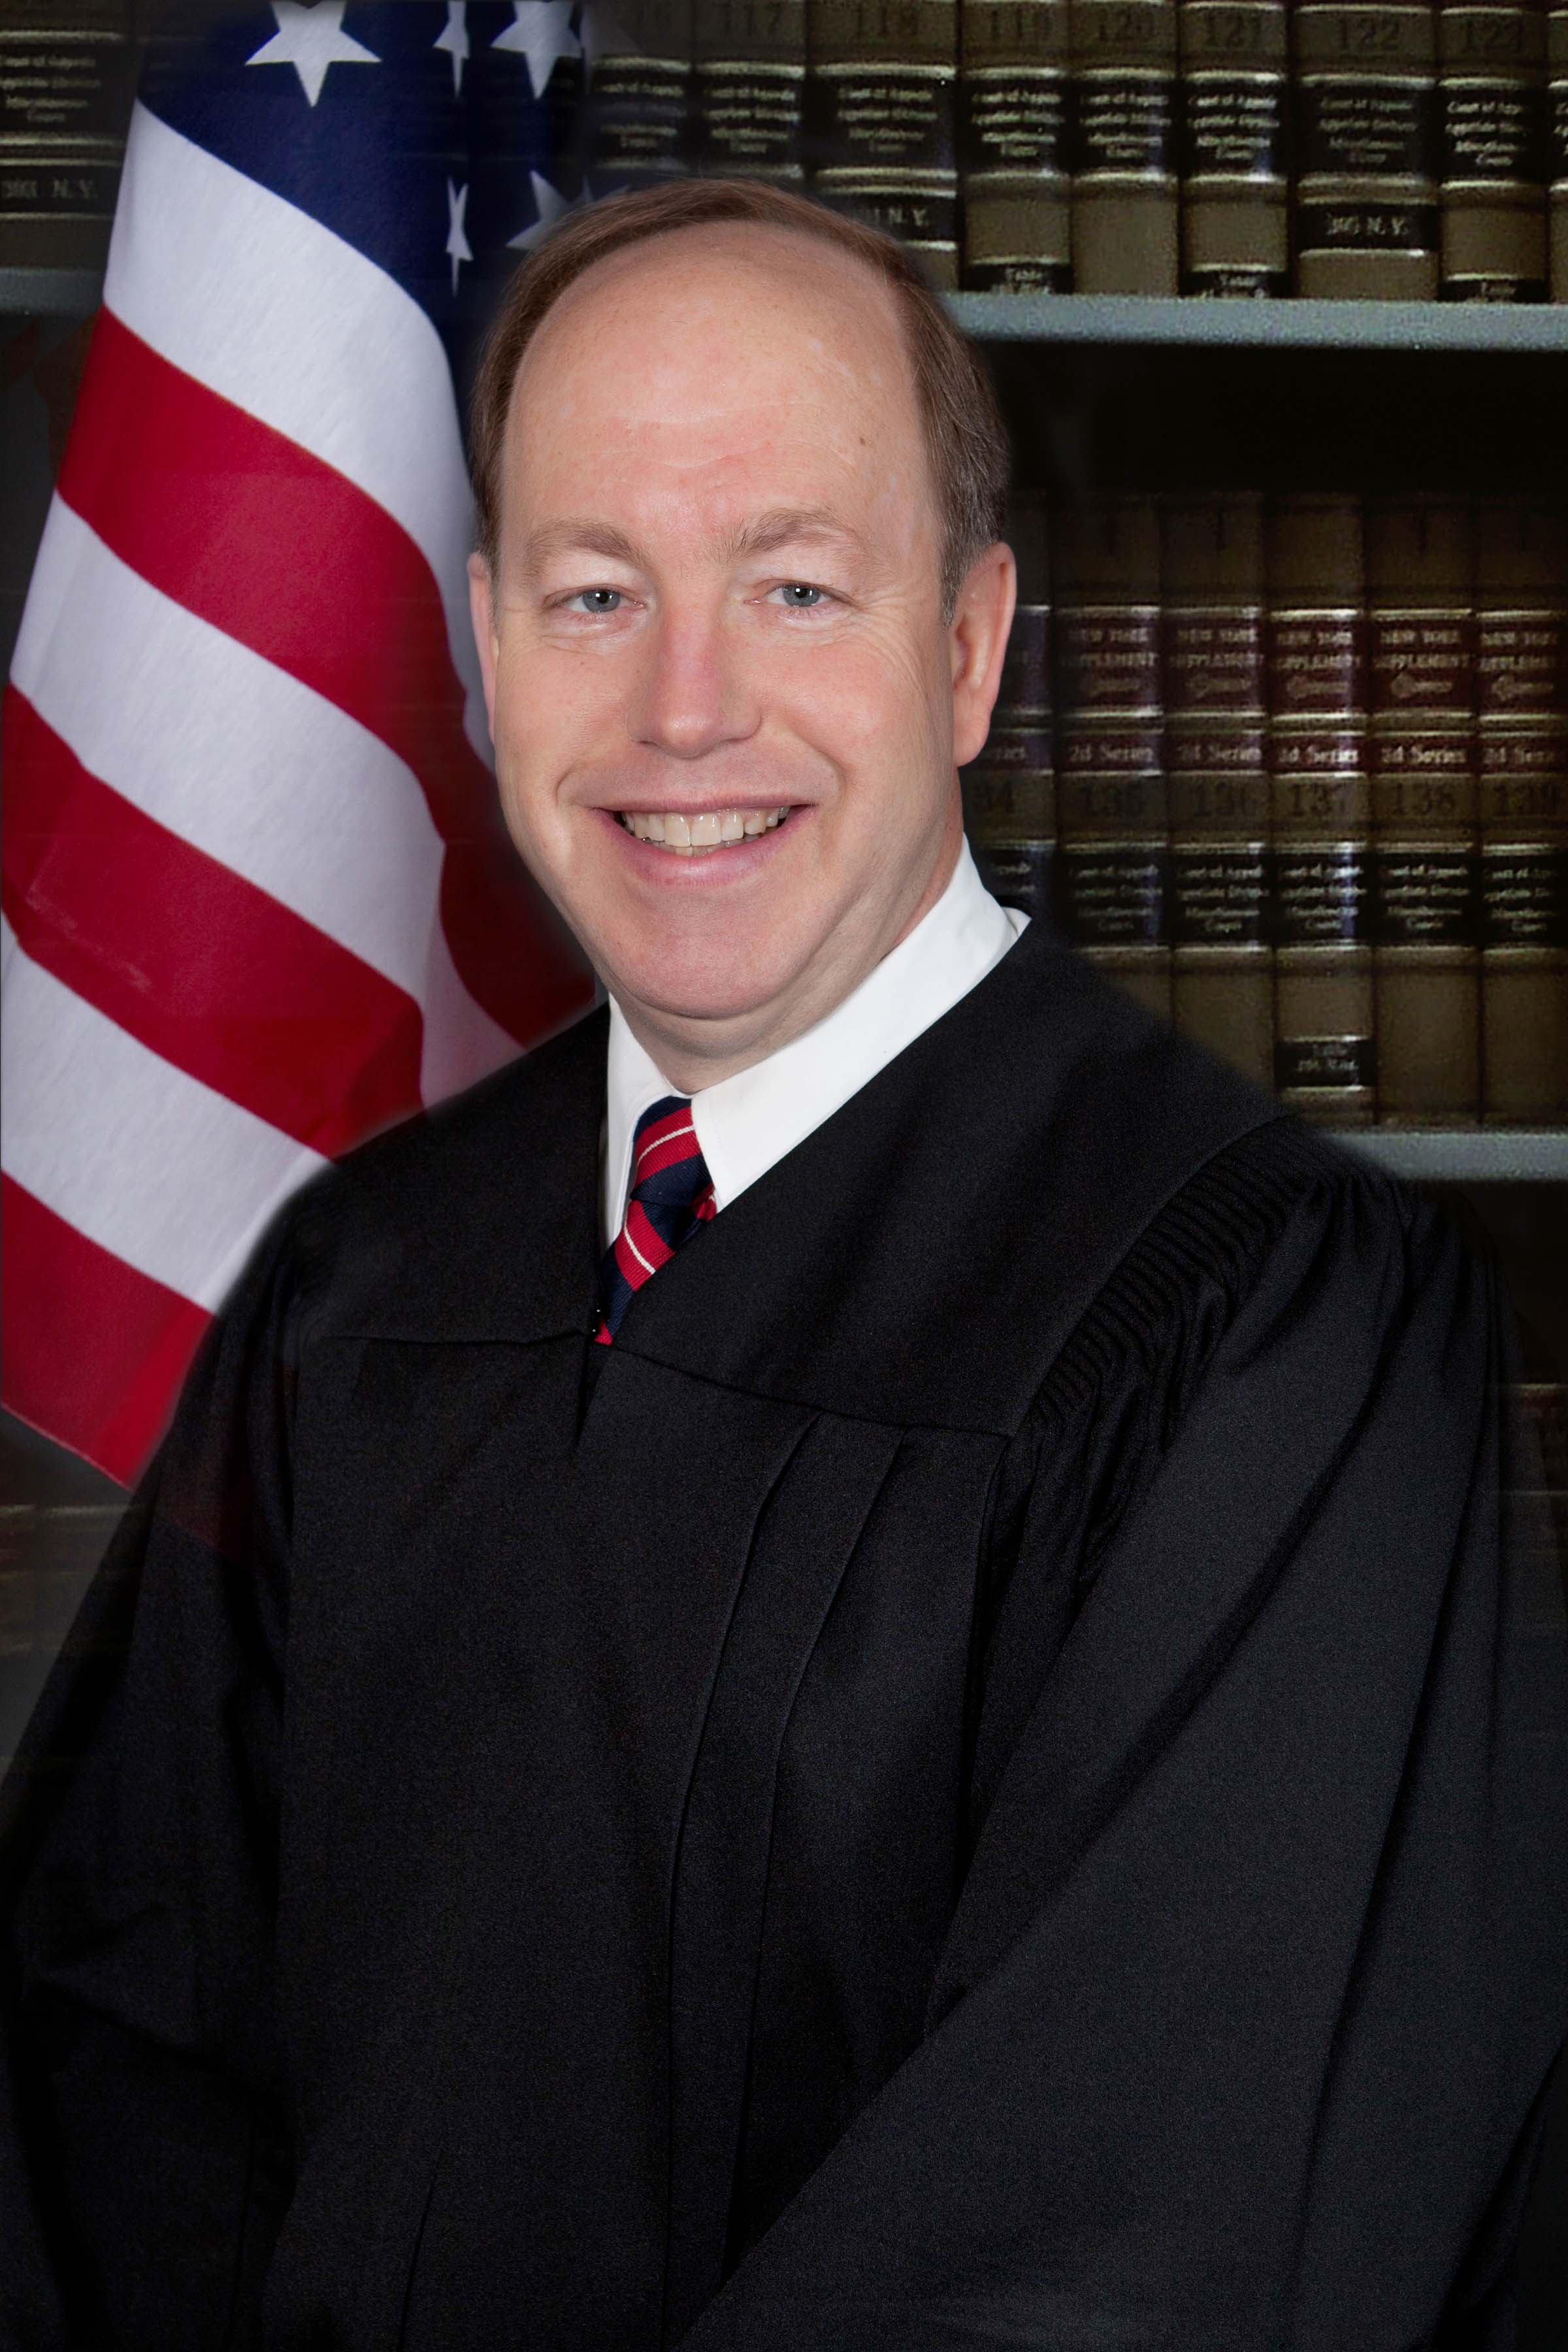 Judge David Zuckerman